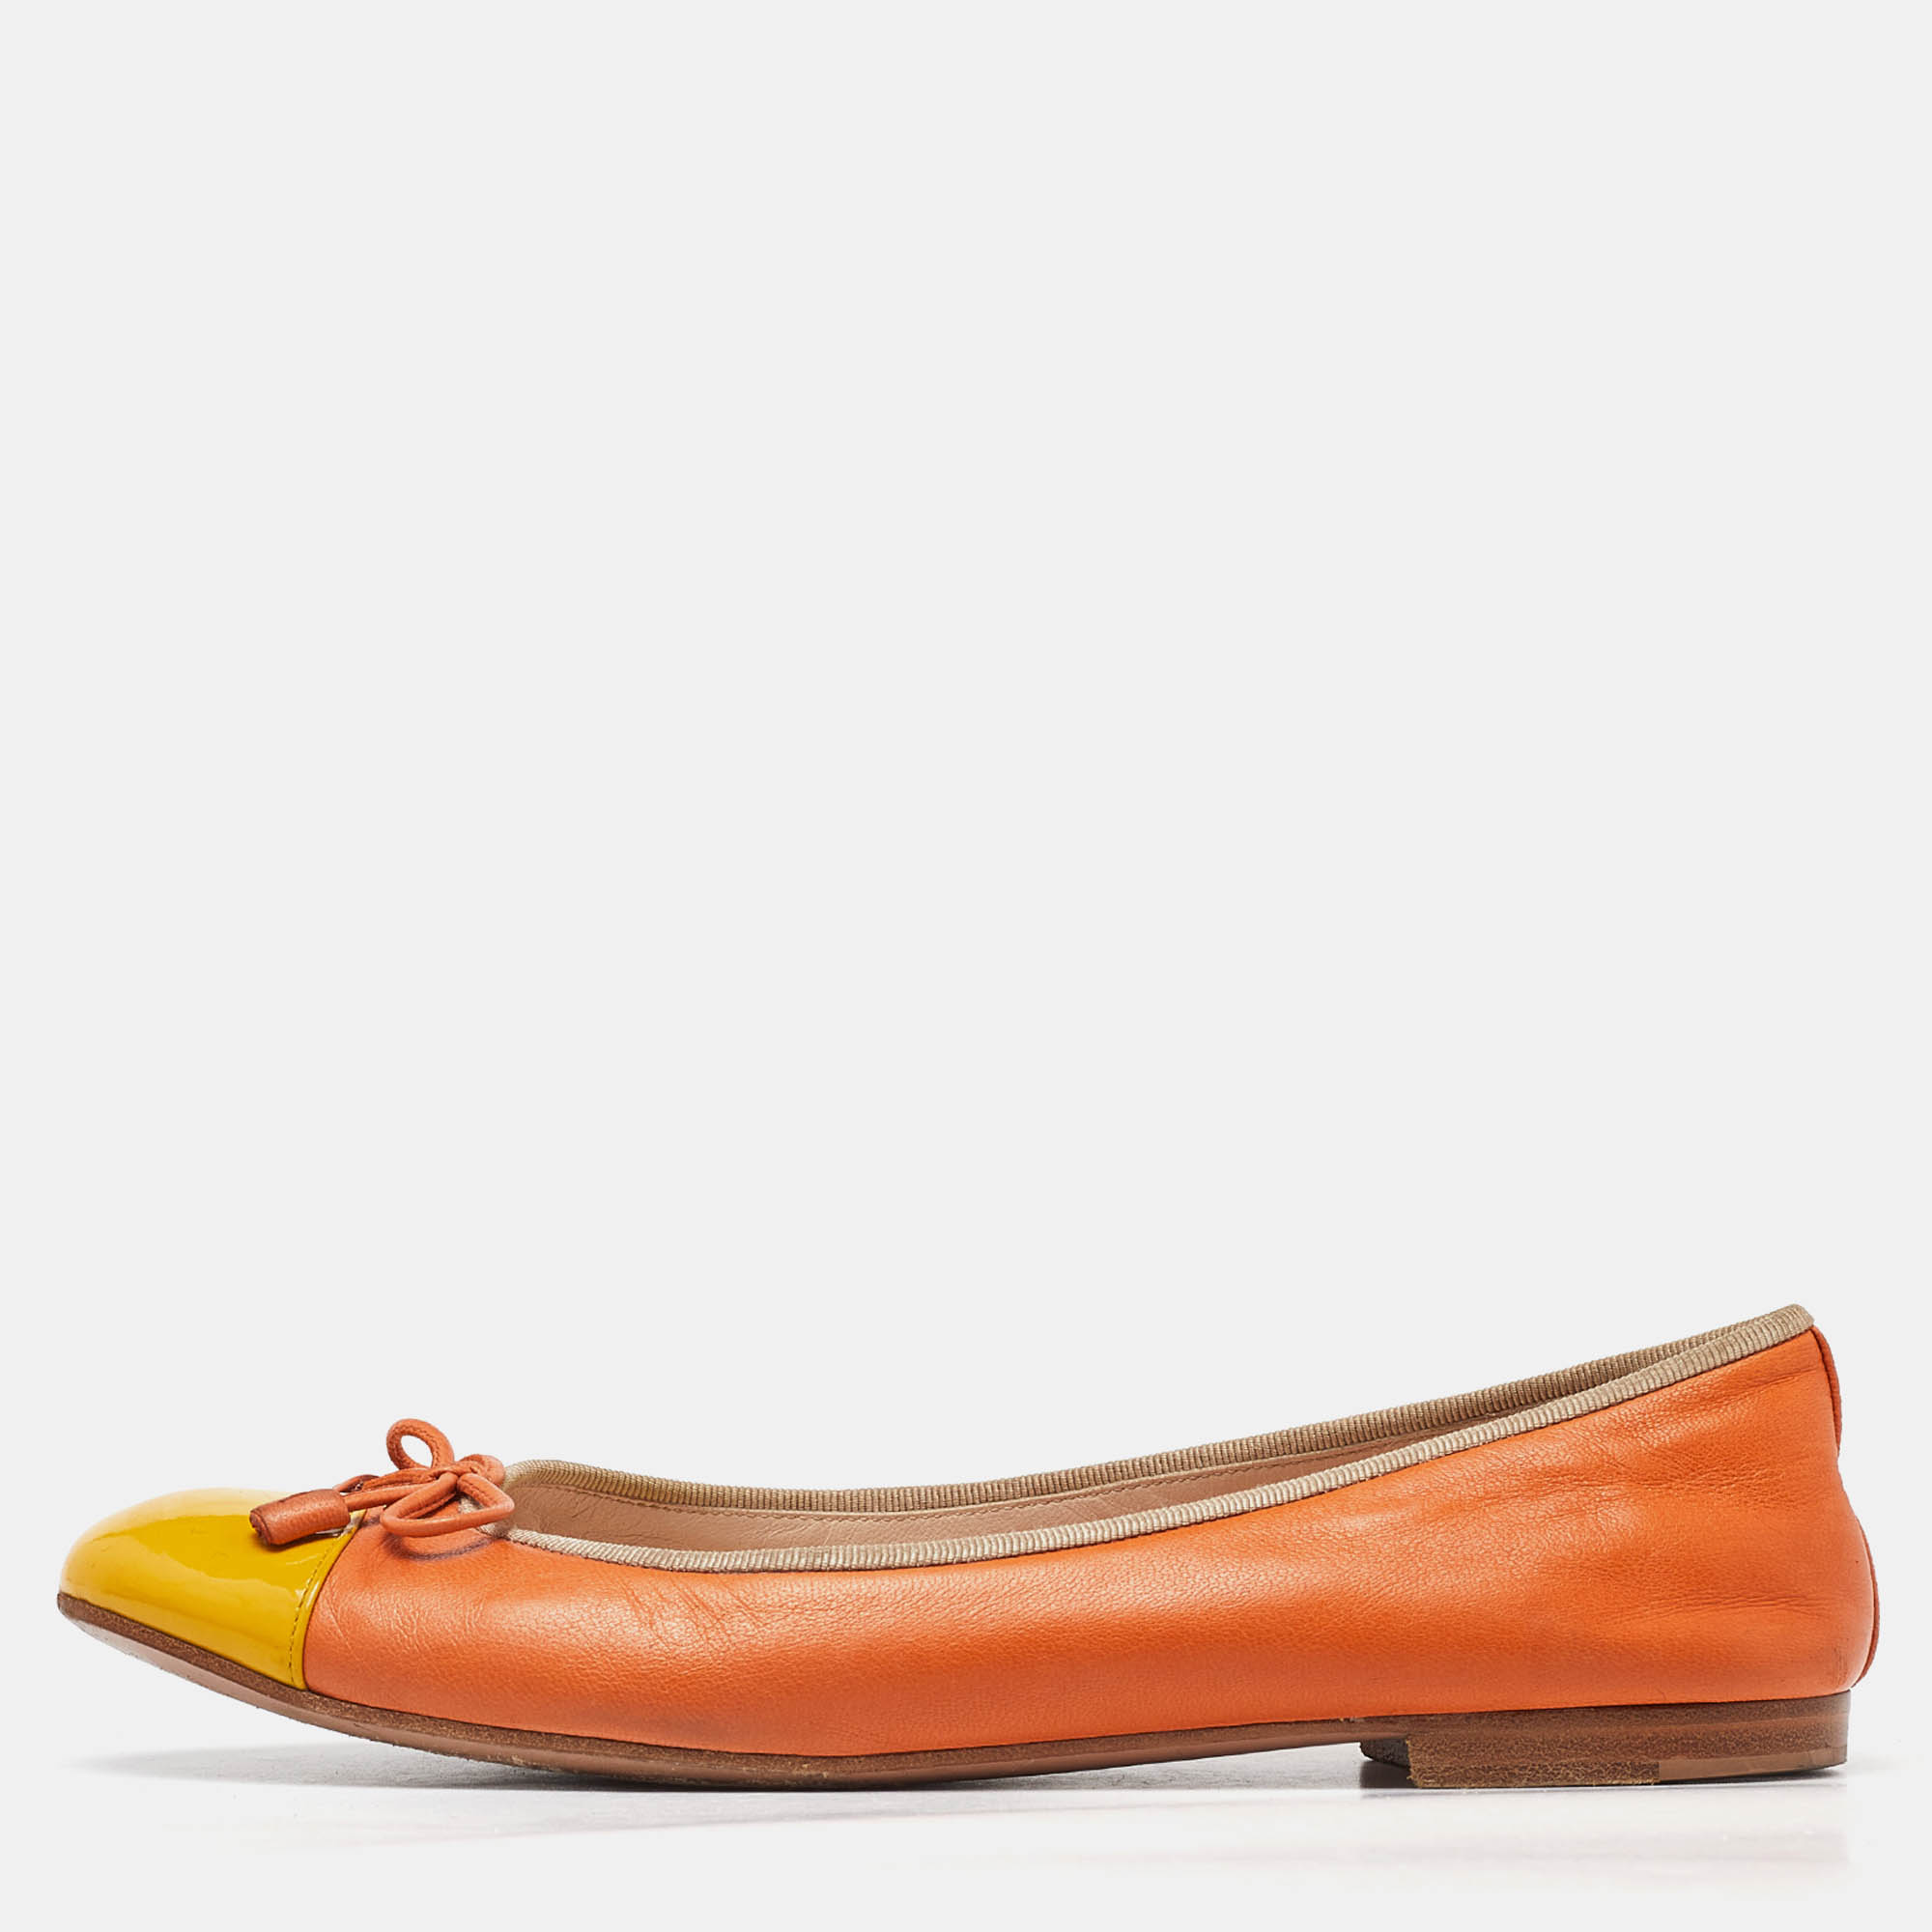 Prada orange/yellow leather bow cap toe ballet flats size 38.5